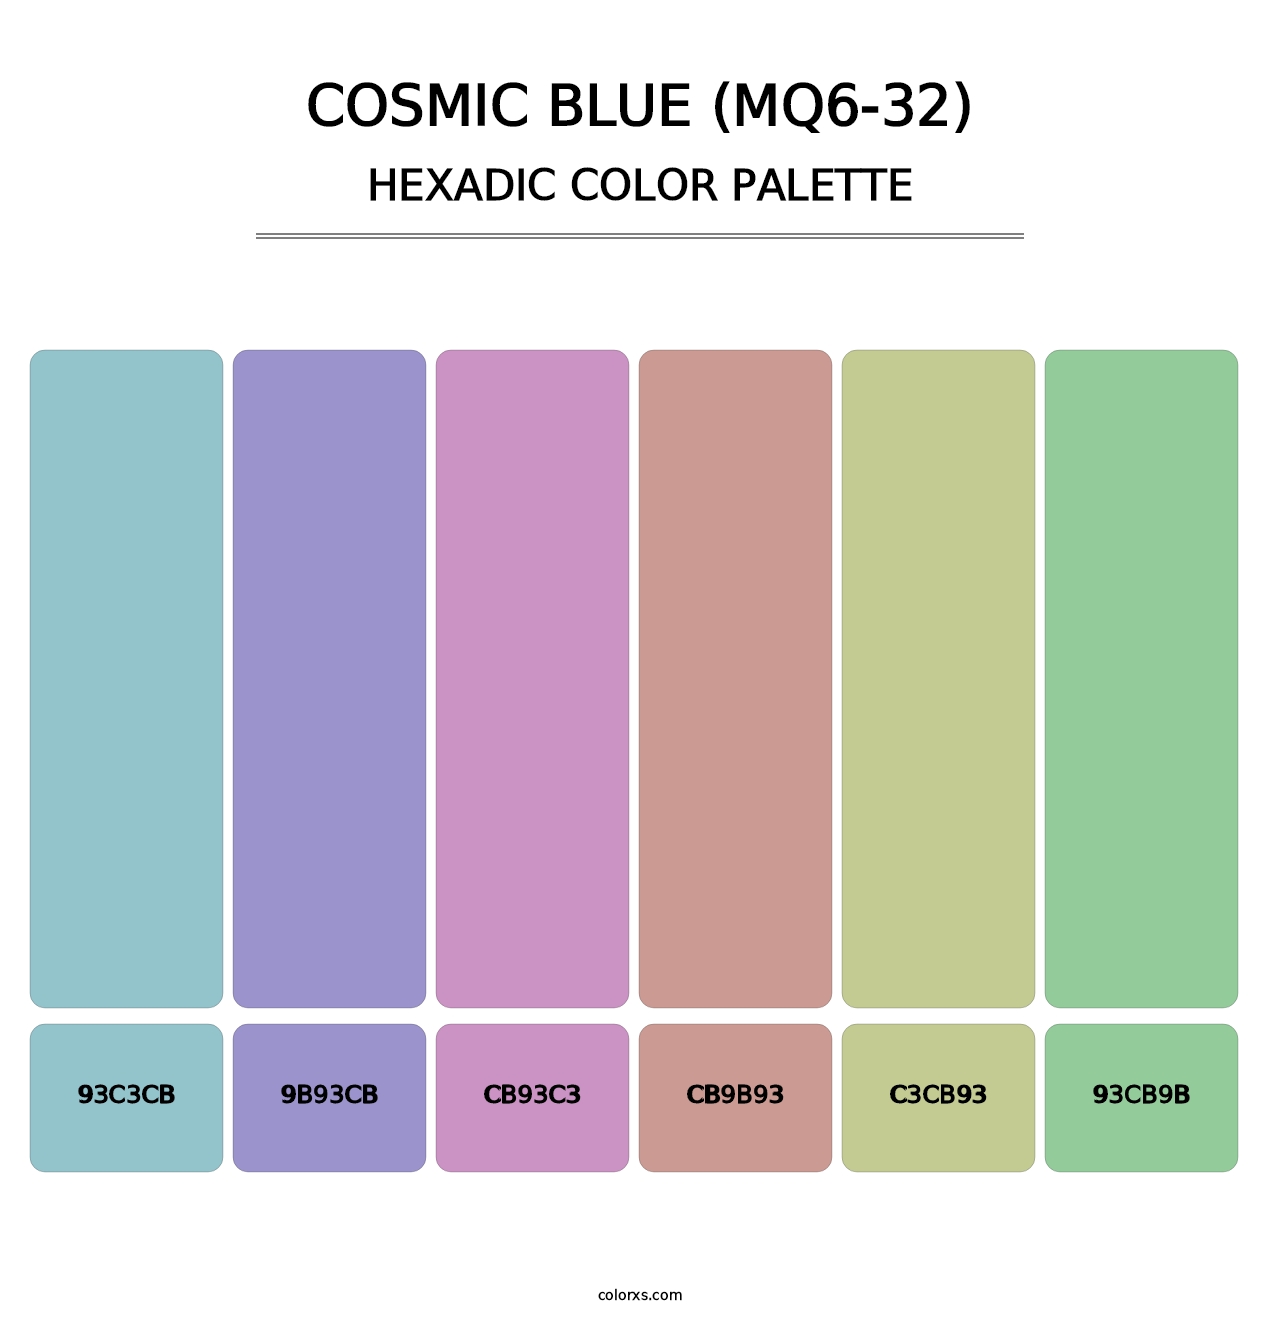 Cosmic Blue (MQ6-32) - Hexadic Color Palette